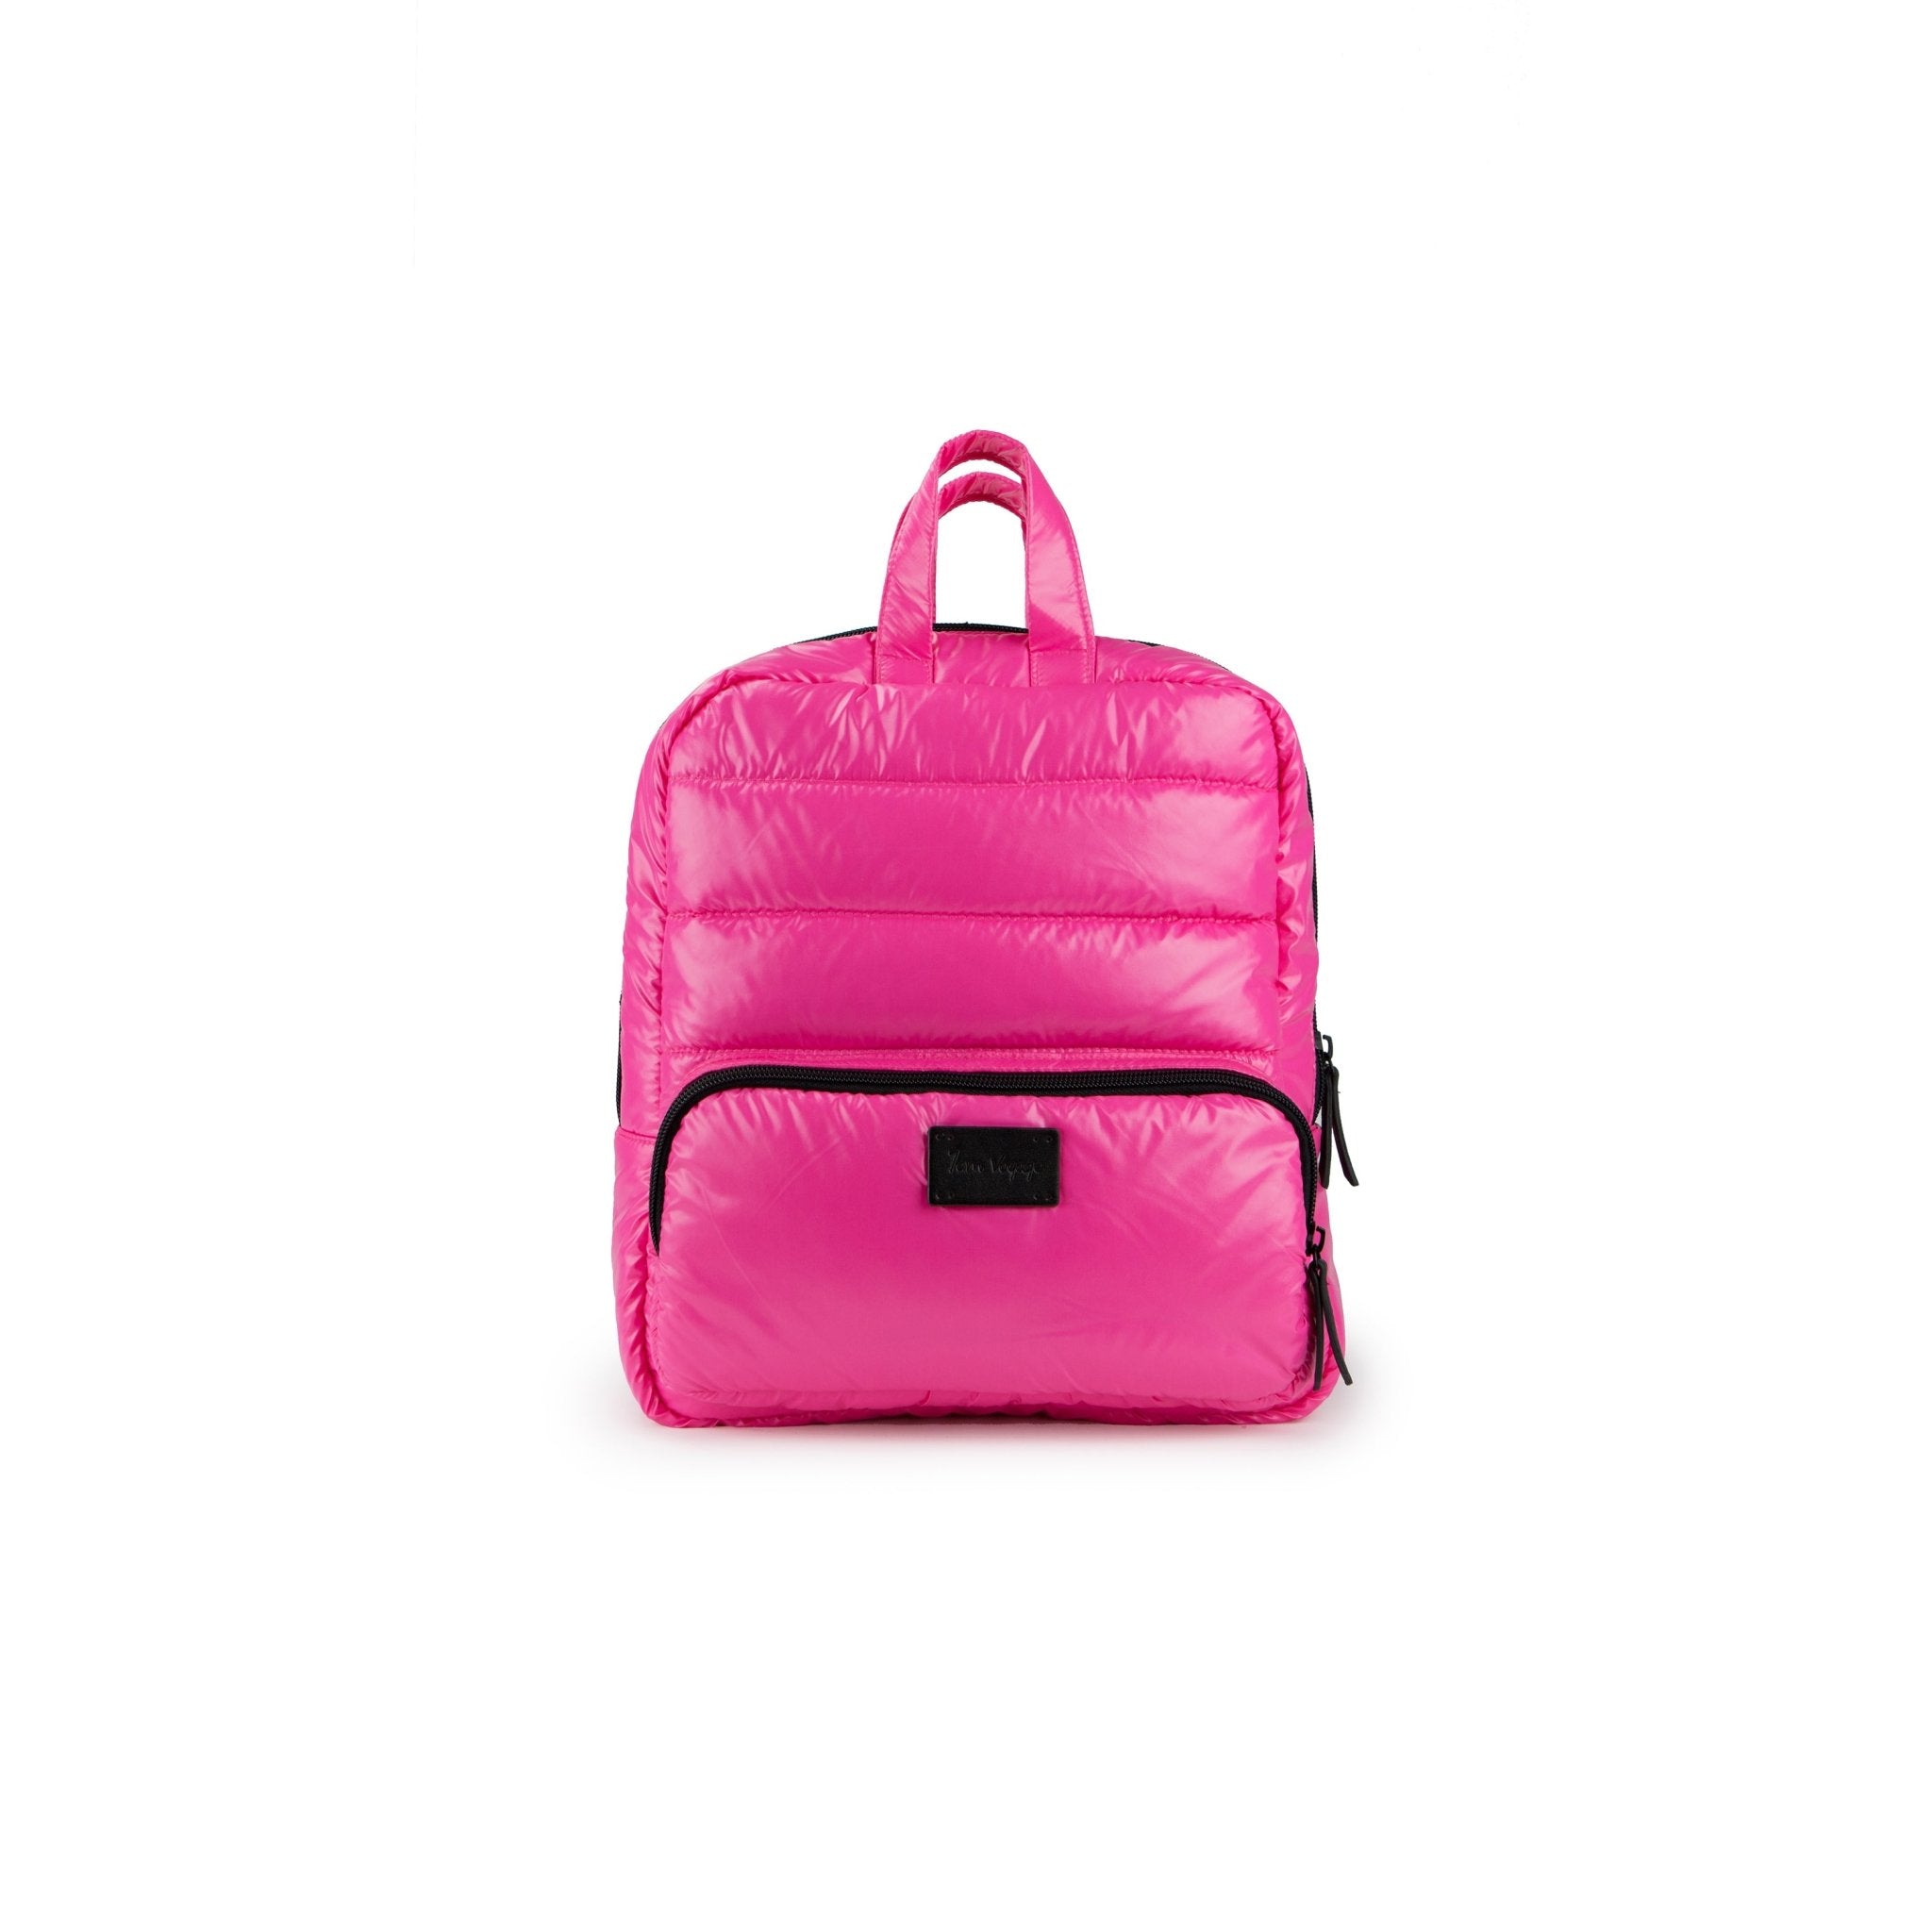 7 AM Mini Backpack - ANB Baby -$20 - $50